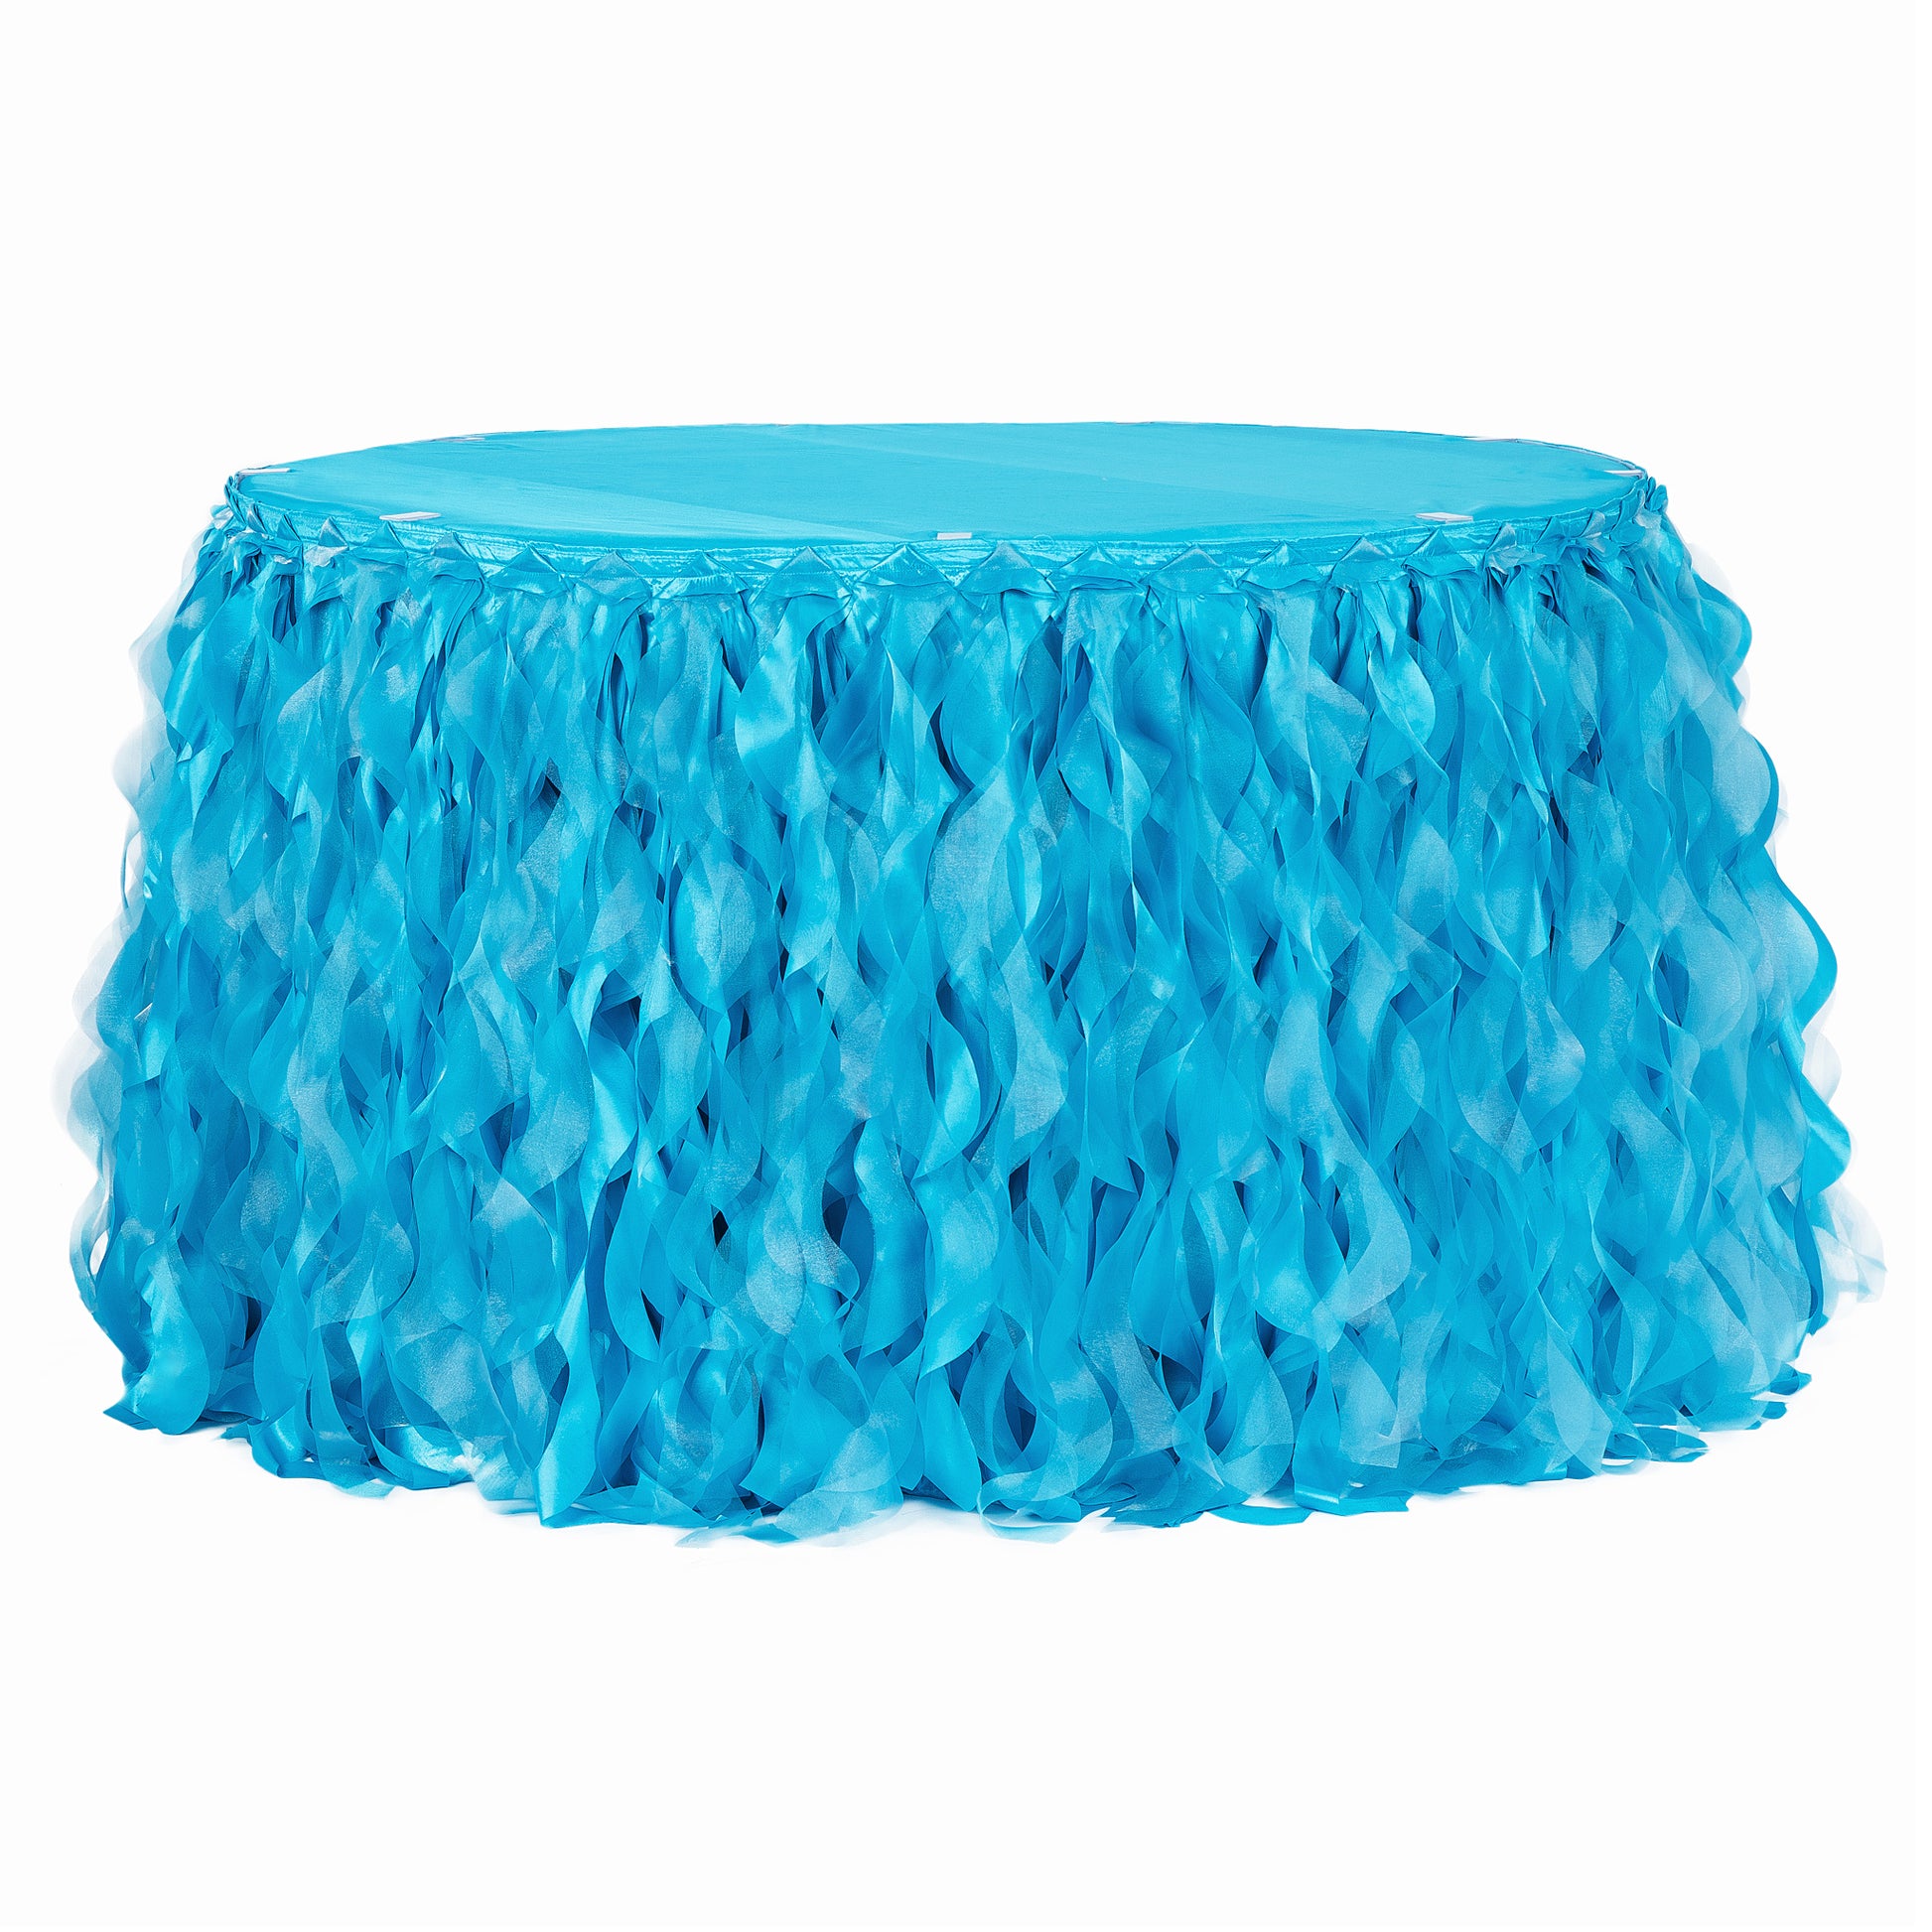 Curly Willow 14ft Table Skirt - Aqua Blue - CV Linens